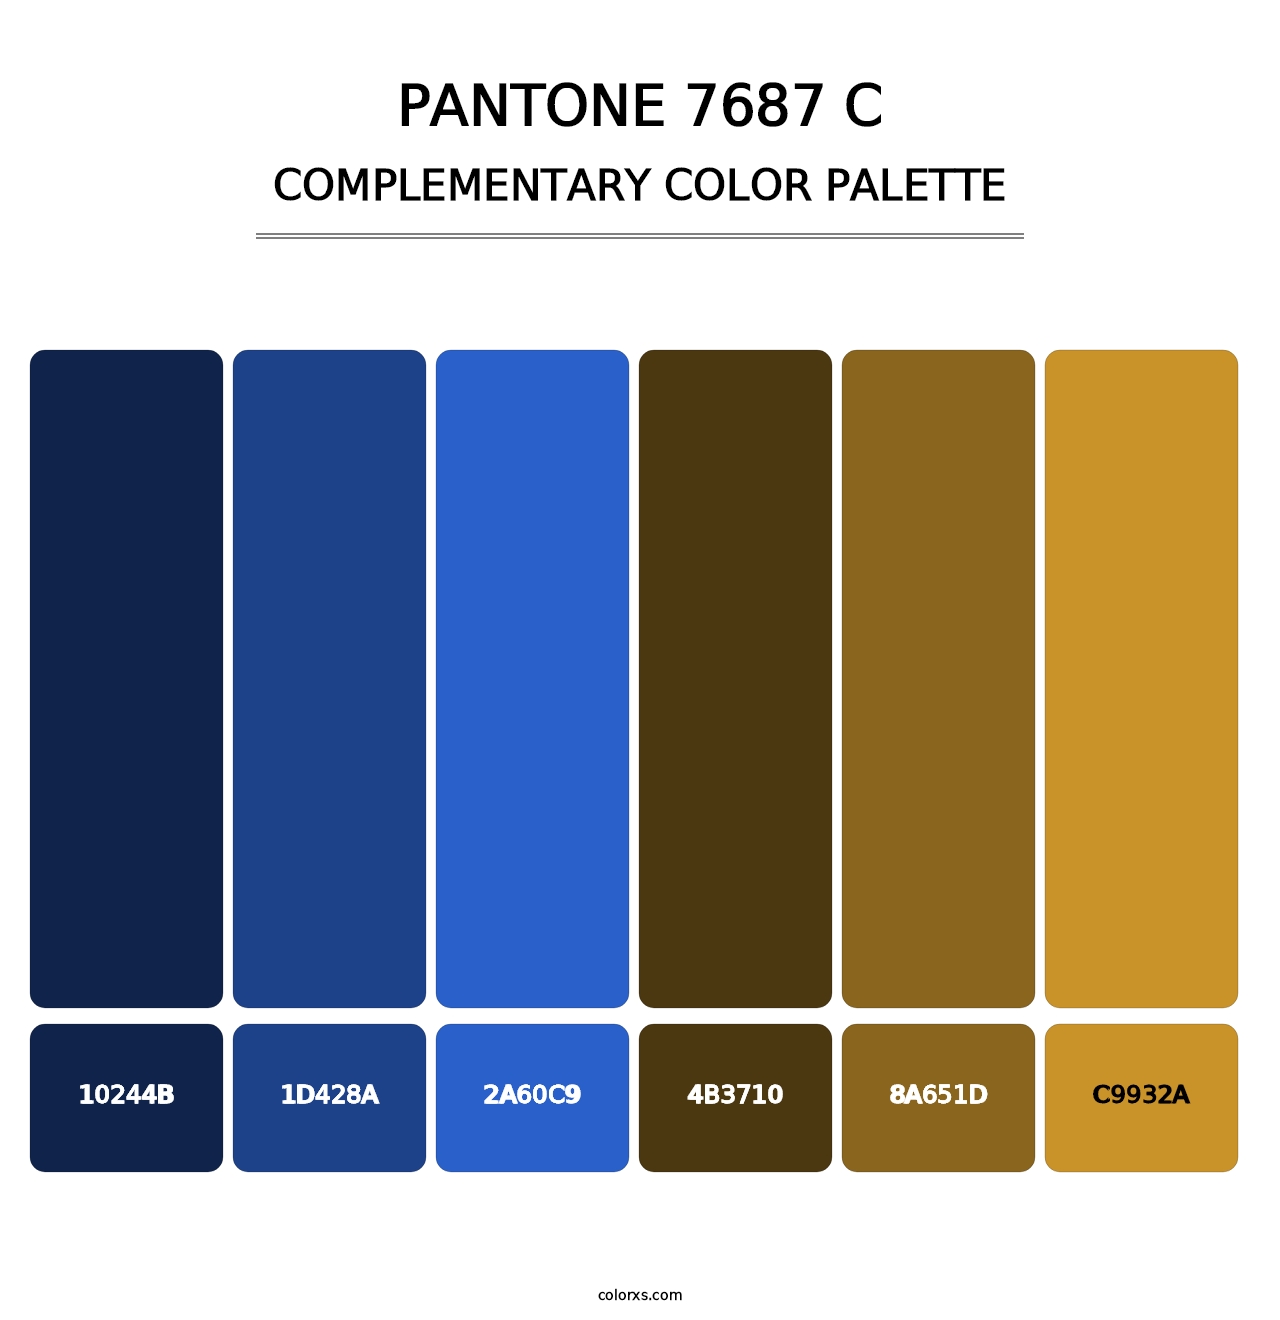 PANTONE 7687 C - Complementary Color Palette